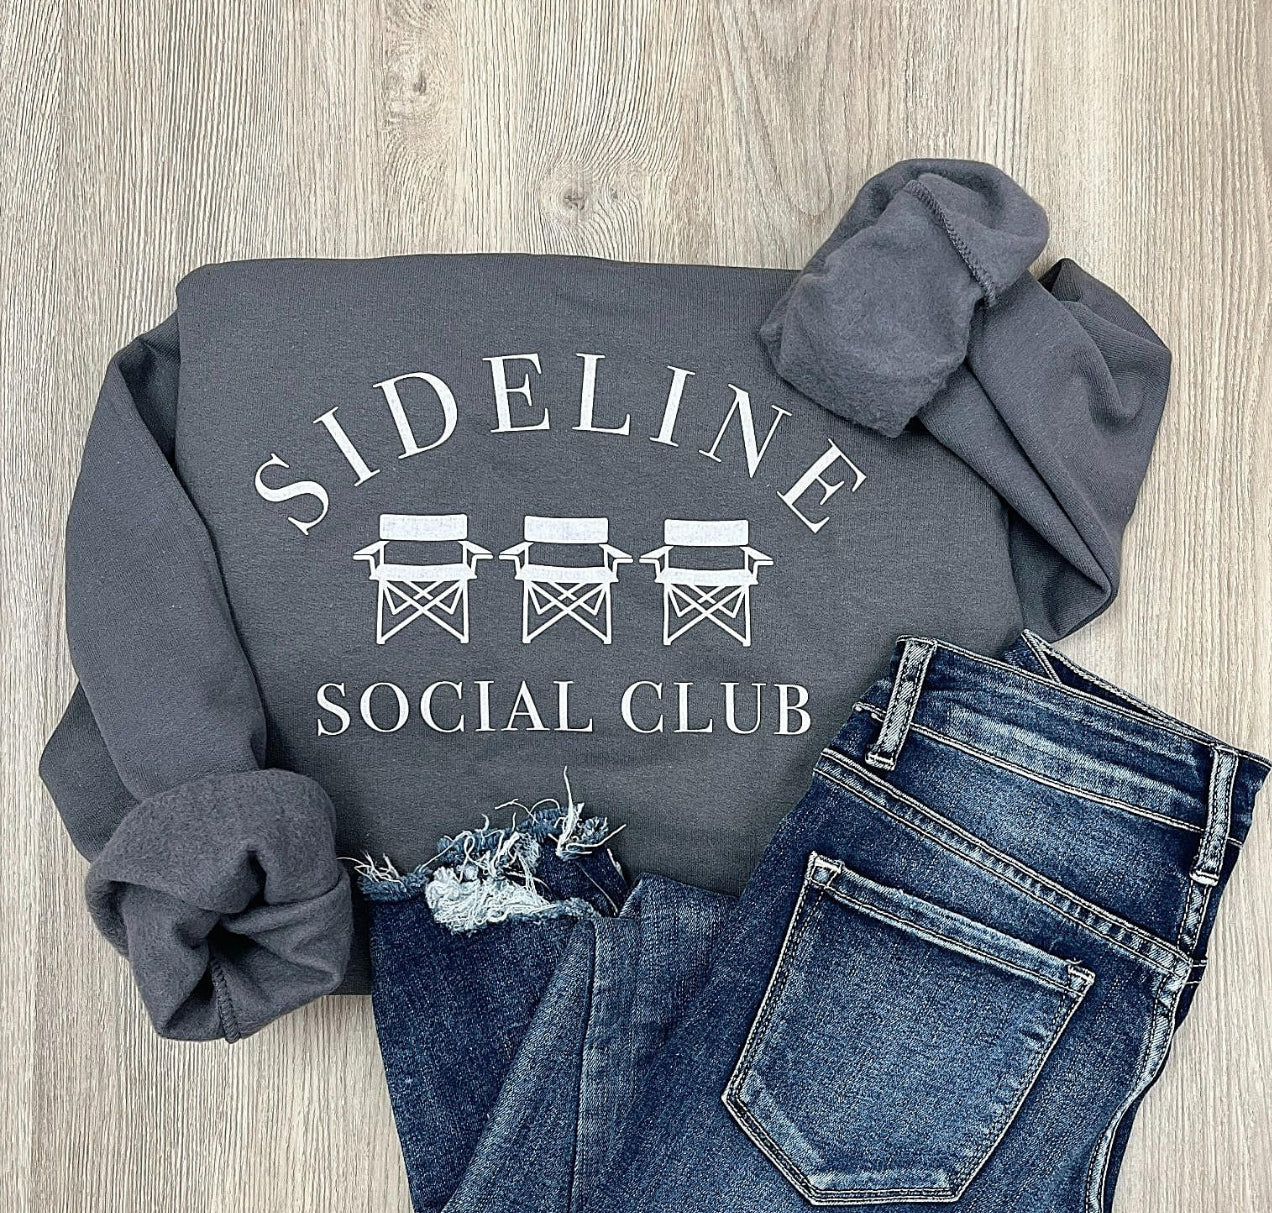 Sideline Club